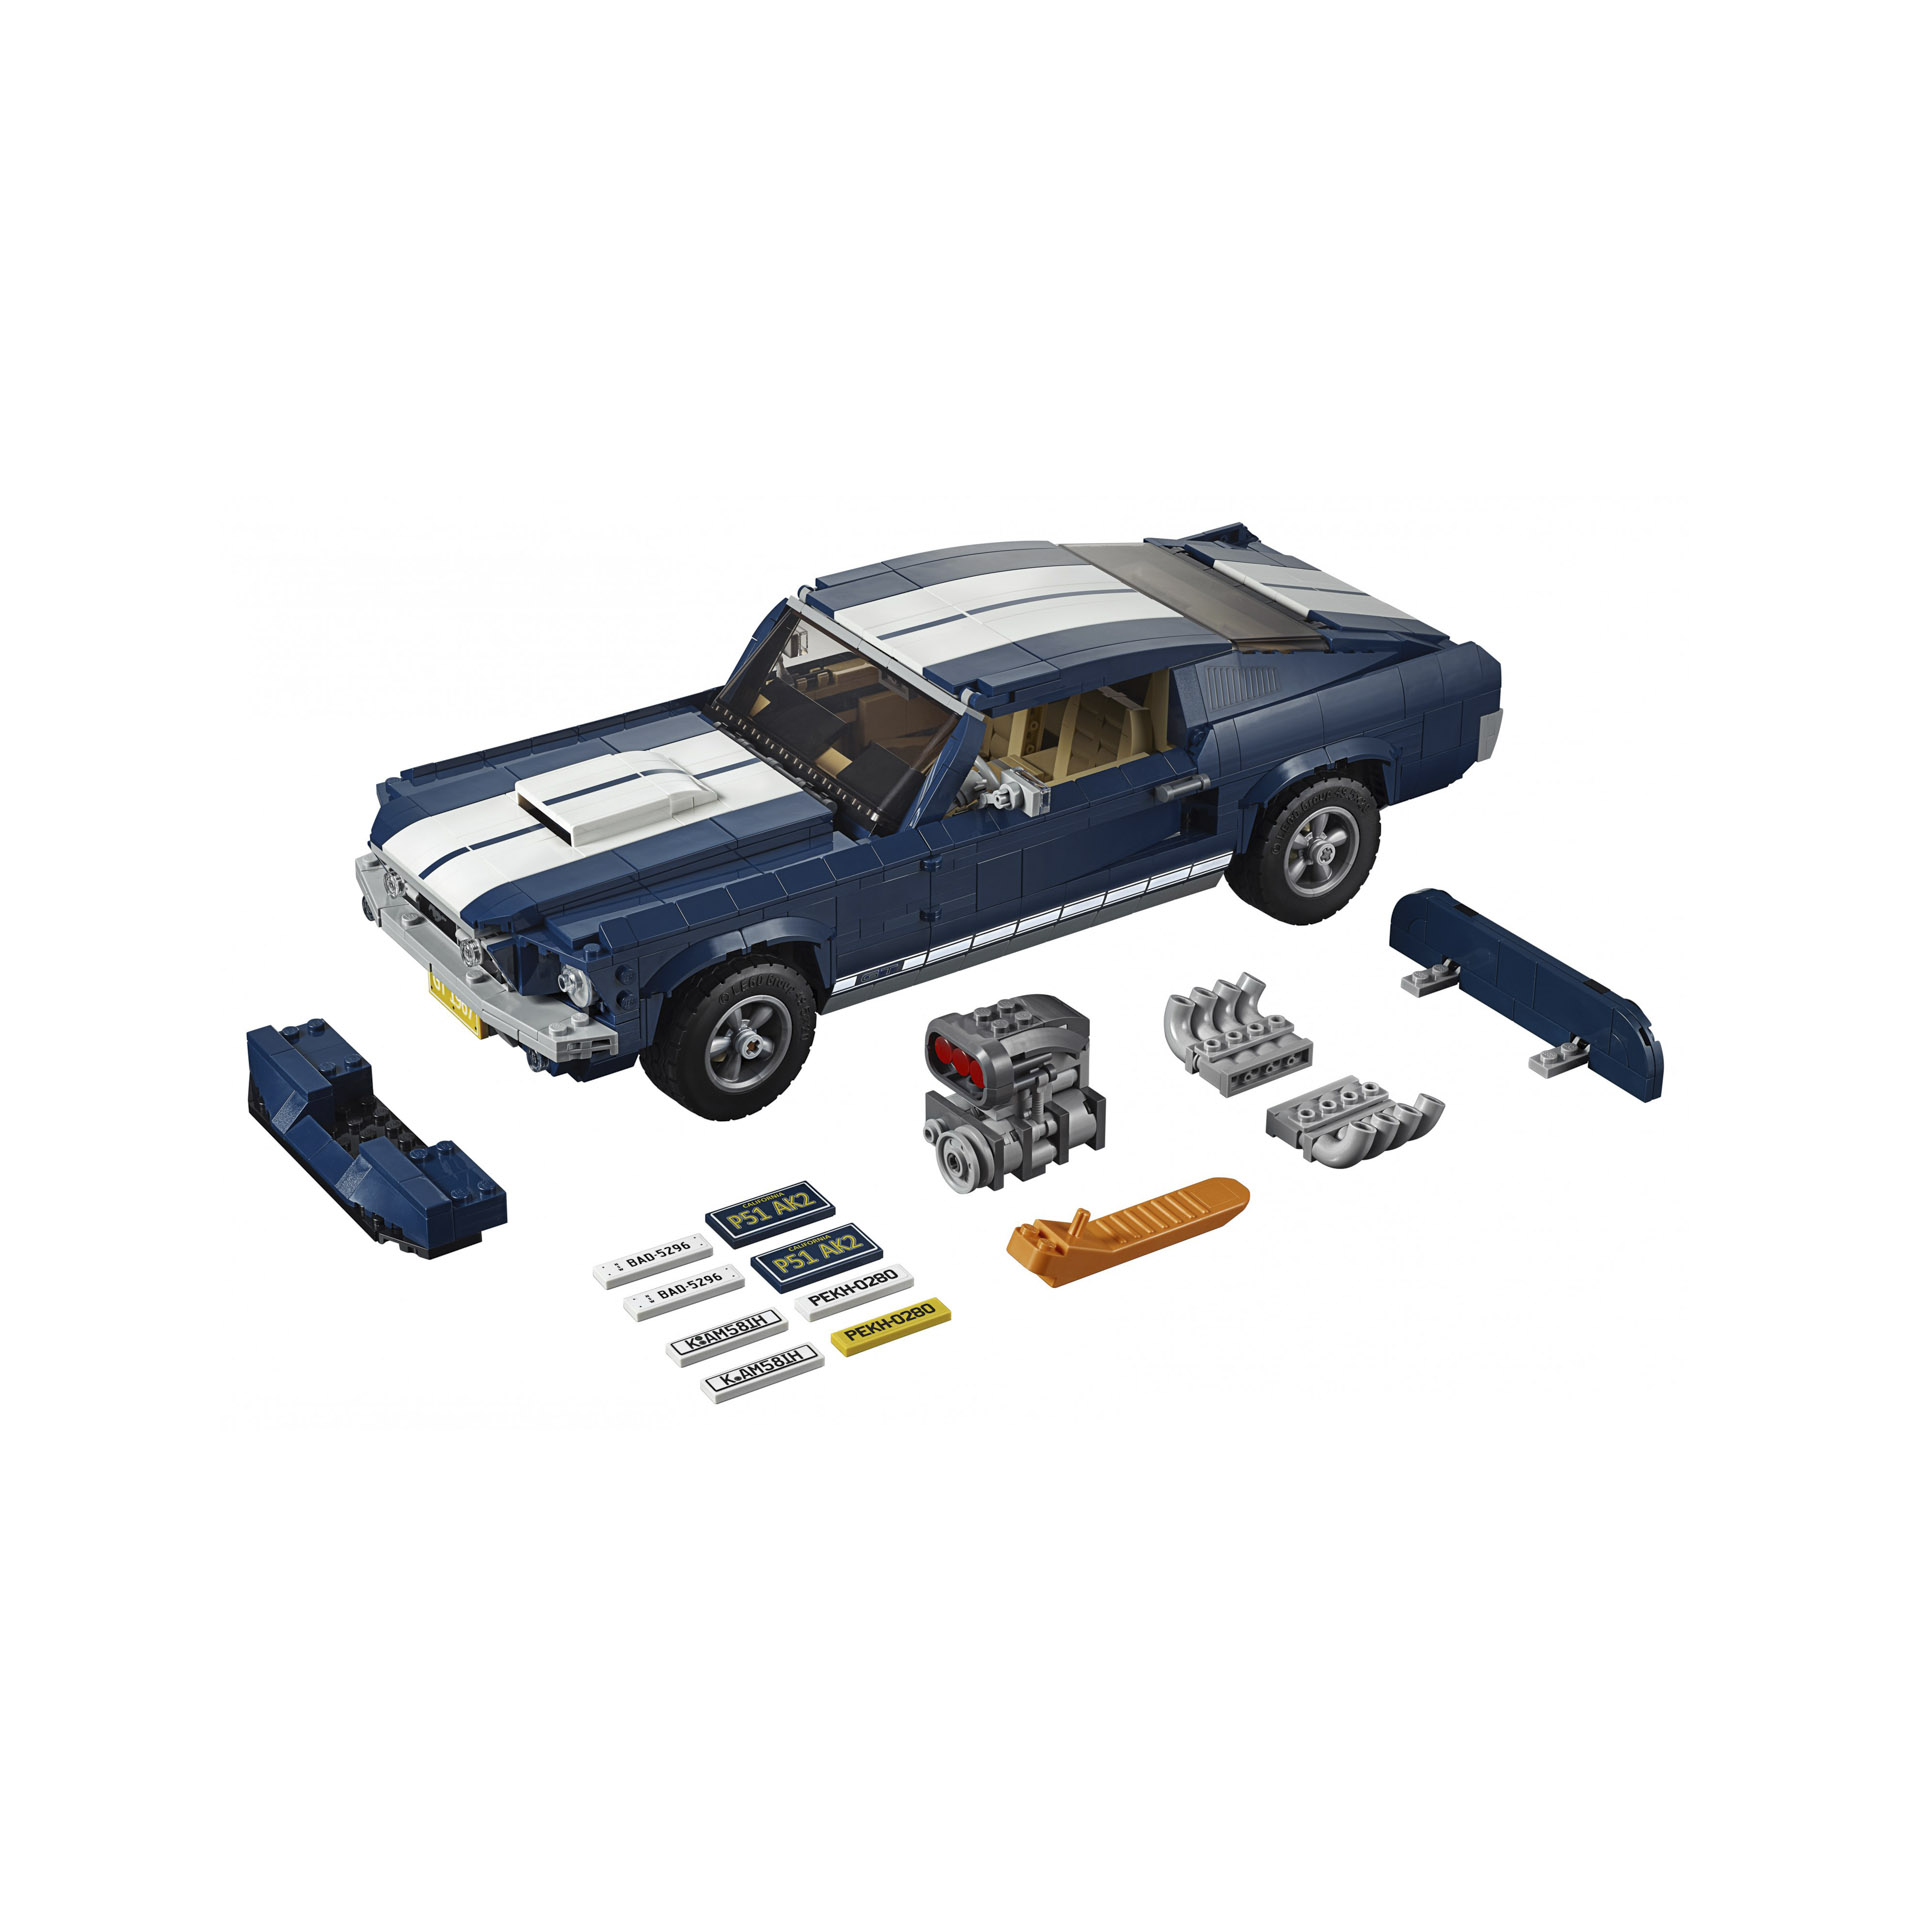 Kit di costruzione Ford Mustang LEGO Creator Expert 10265 (1.470 pezzi) 10265, , large